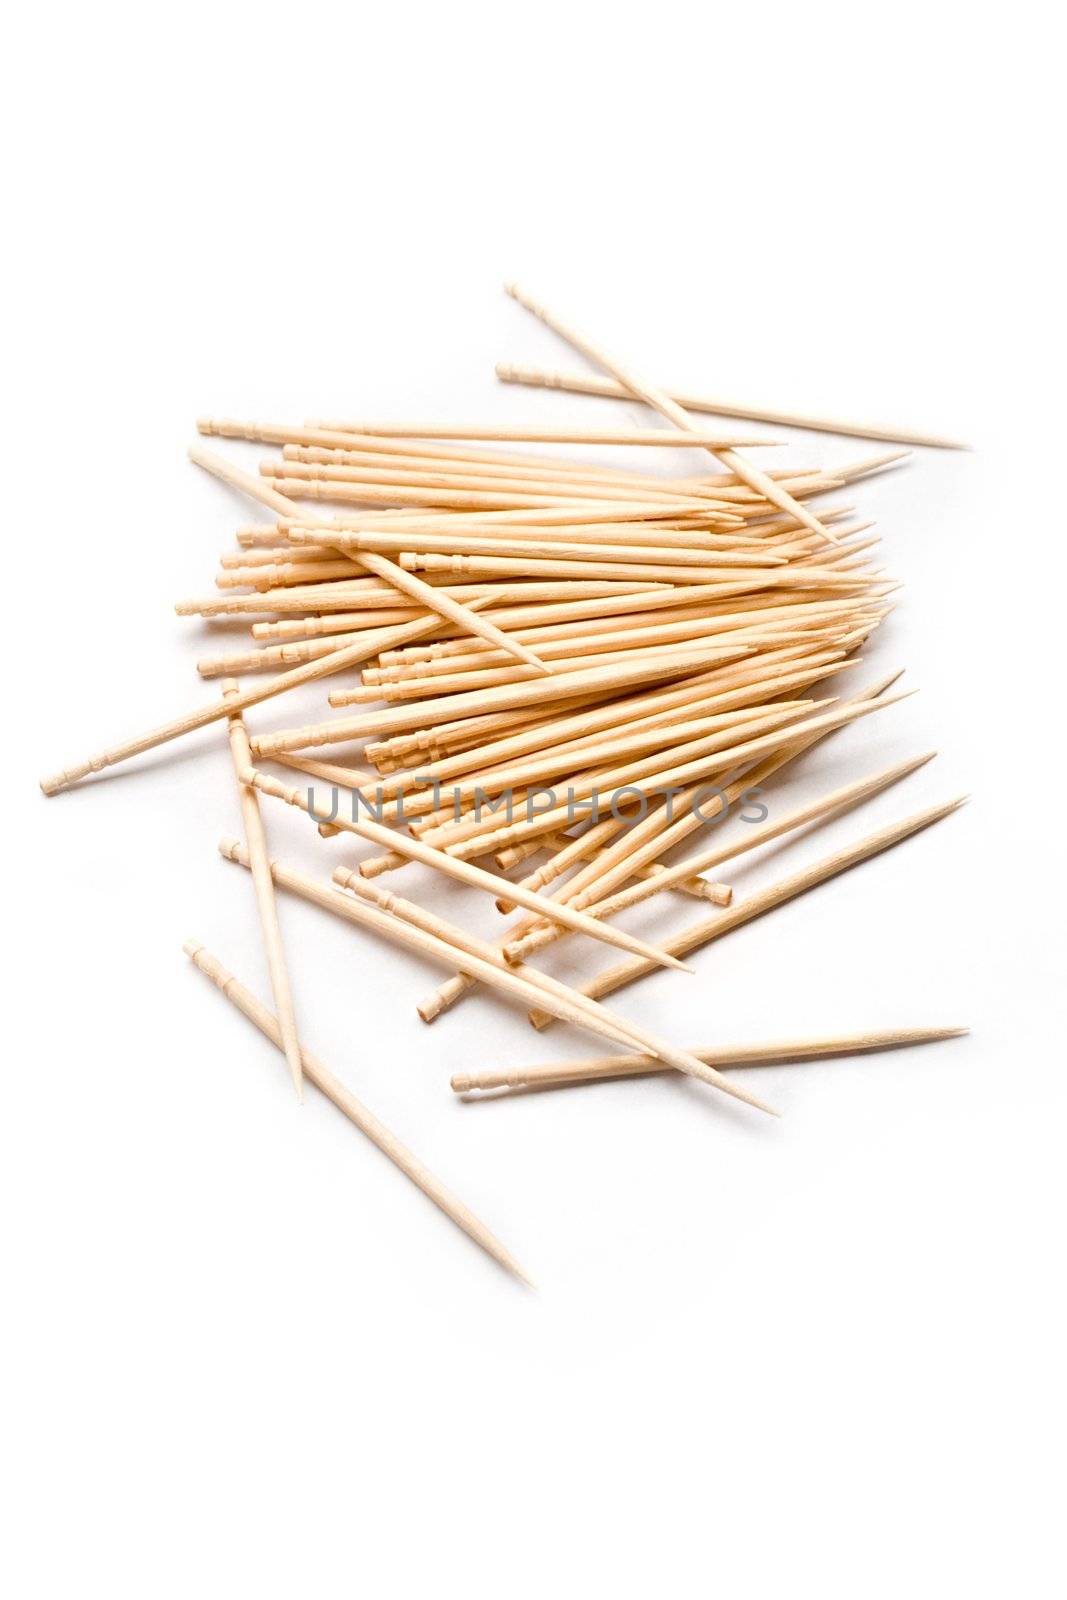 Toothpicks isolated on white by Garsya